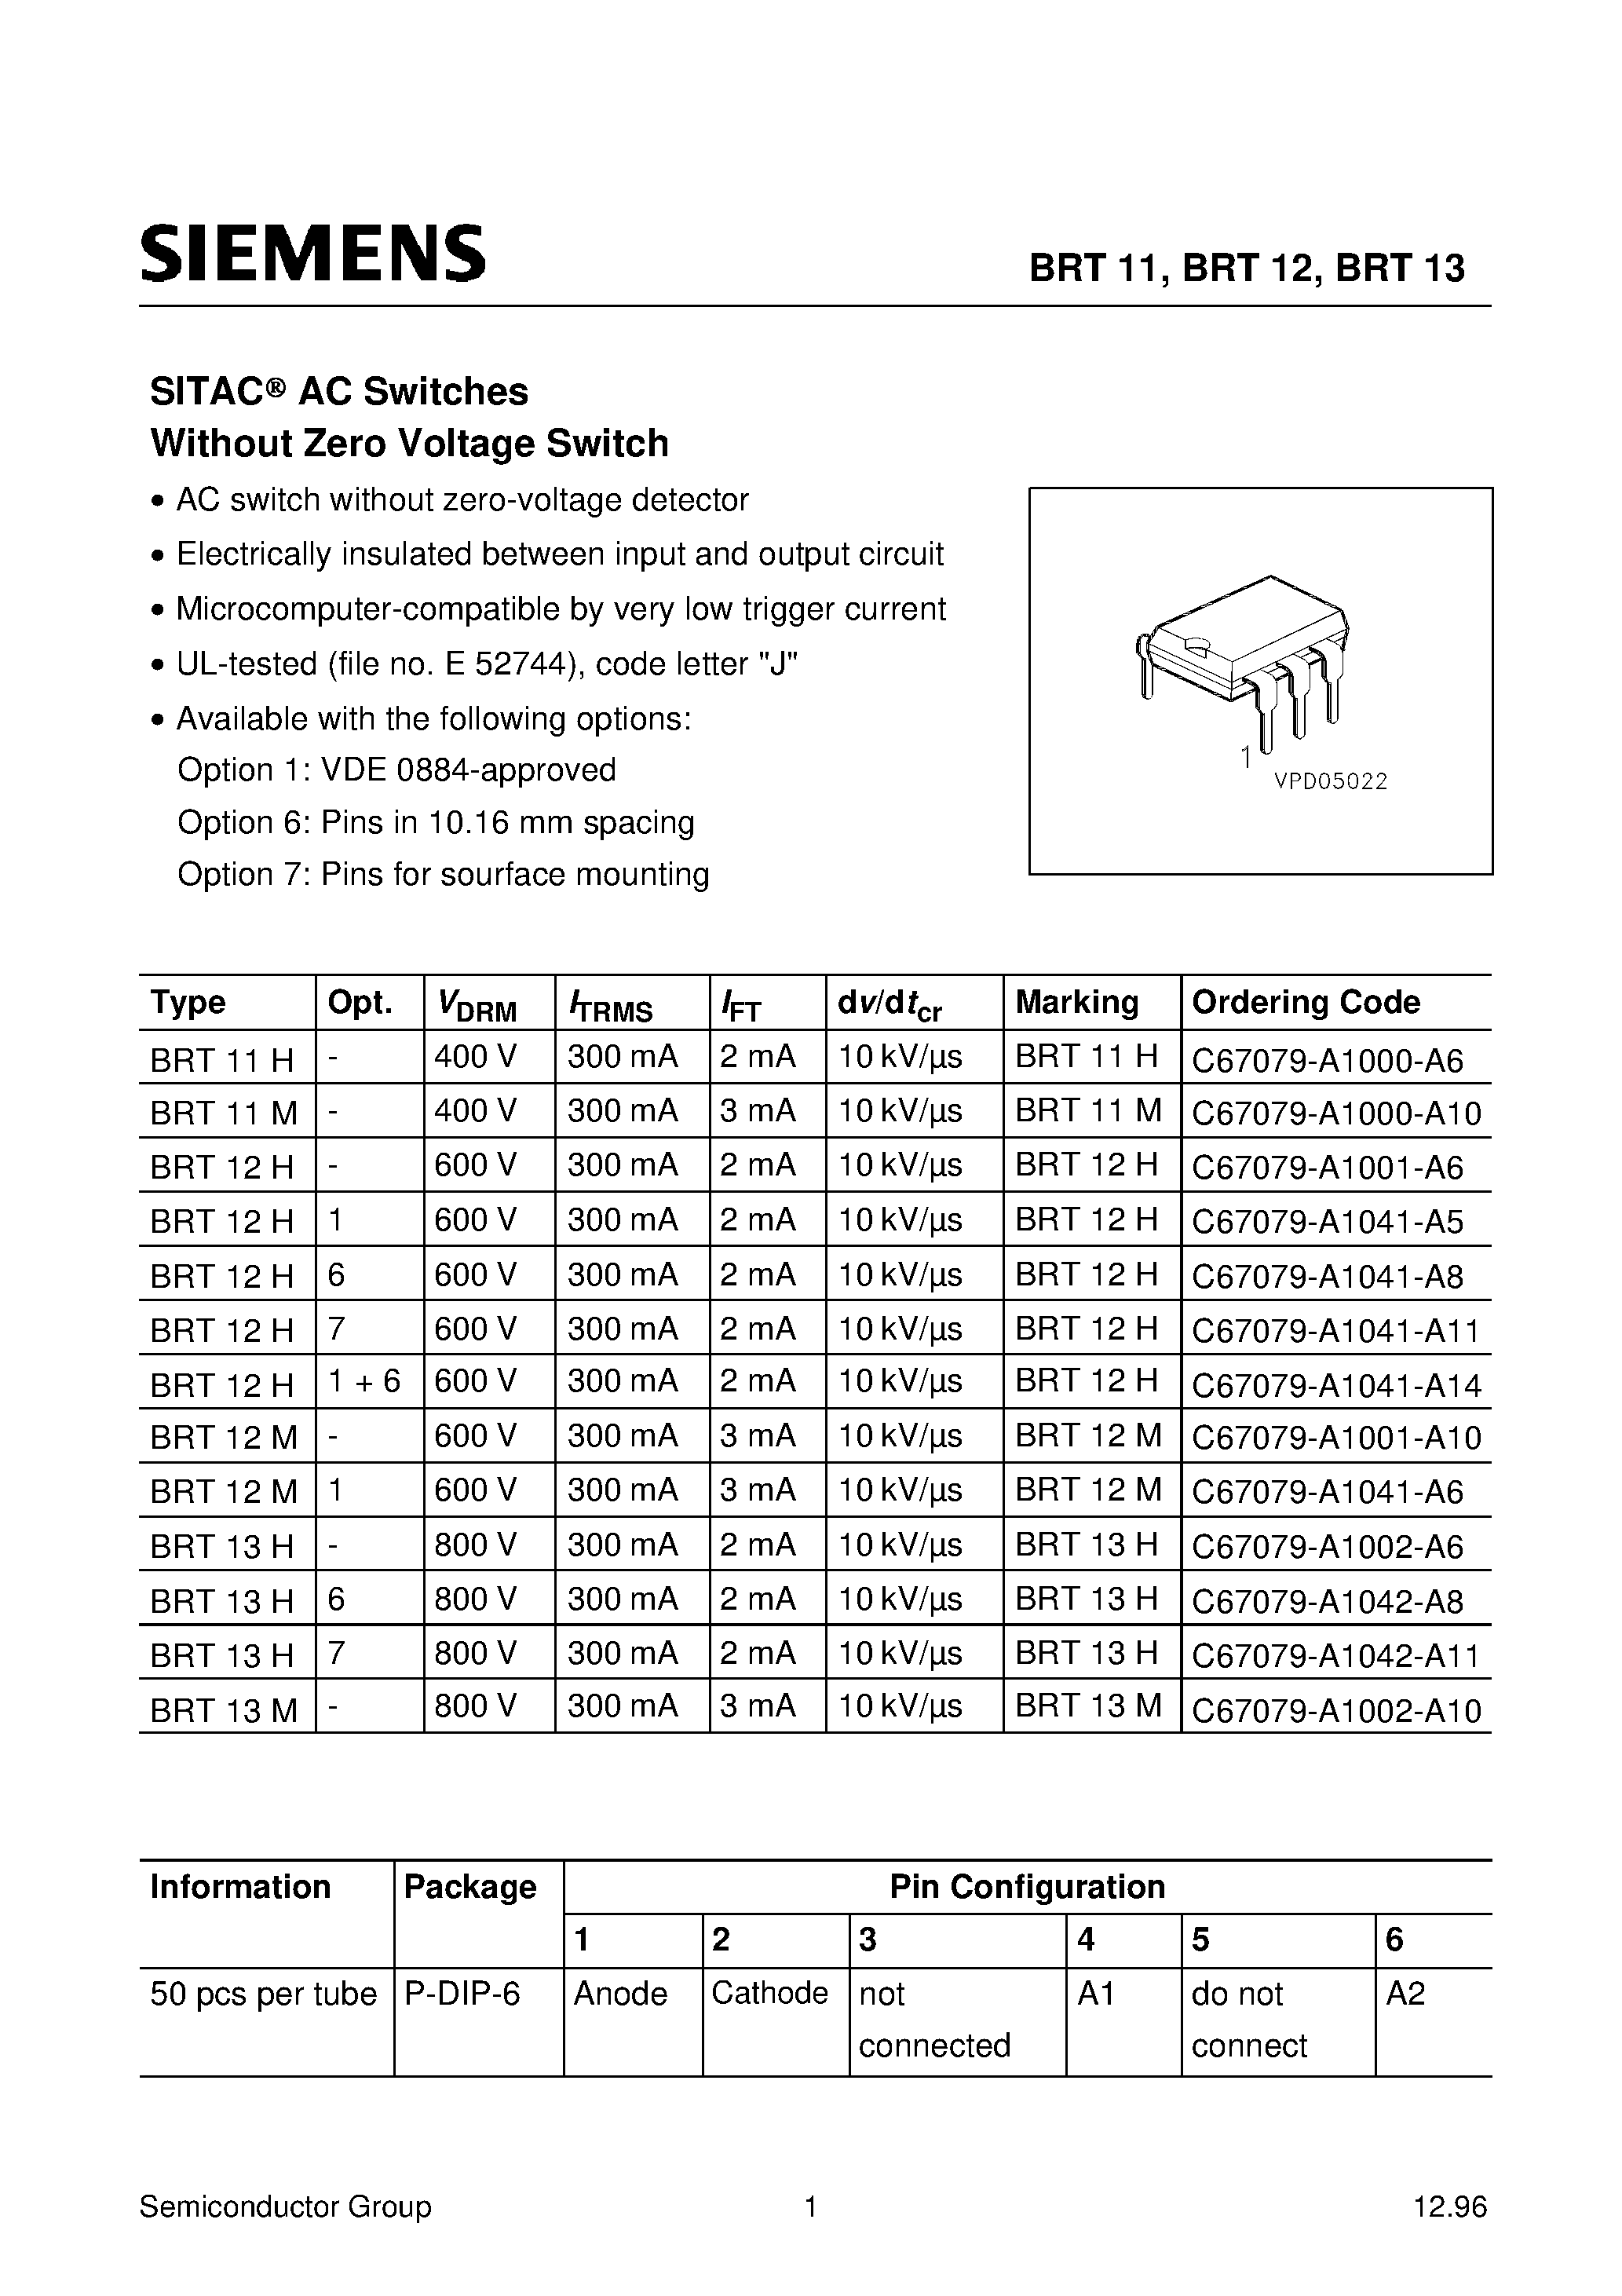 Datasheet BRT11M - SITACO AC Switches Without Zero Voltage Switch page 1